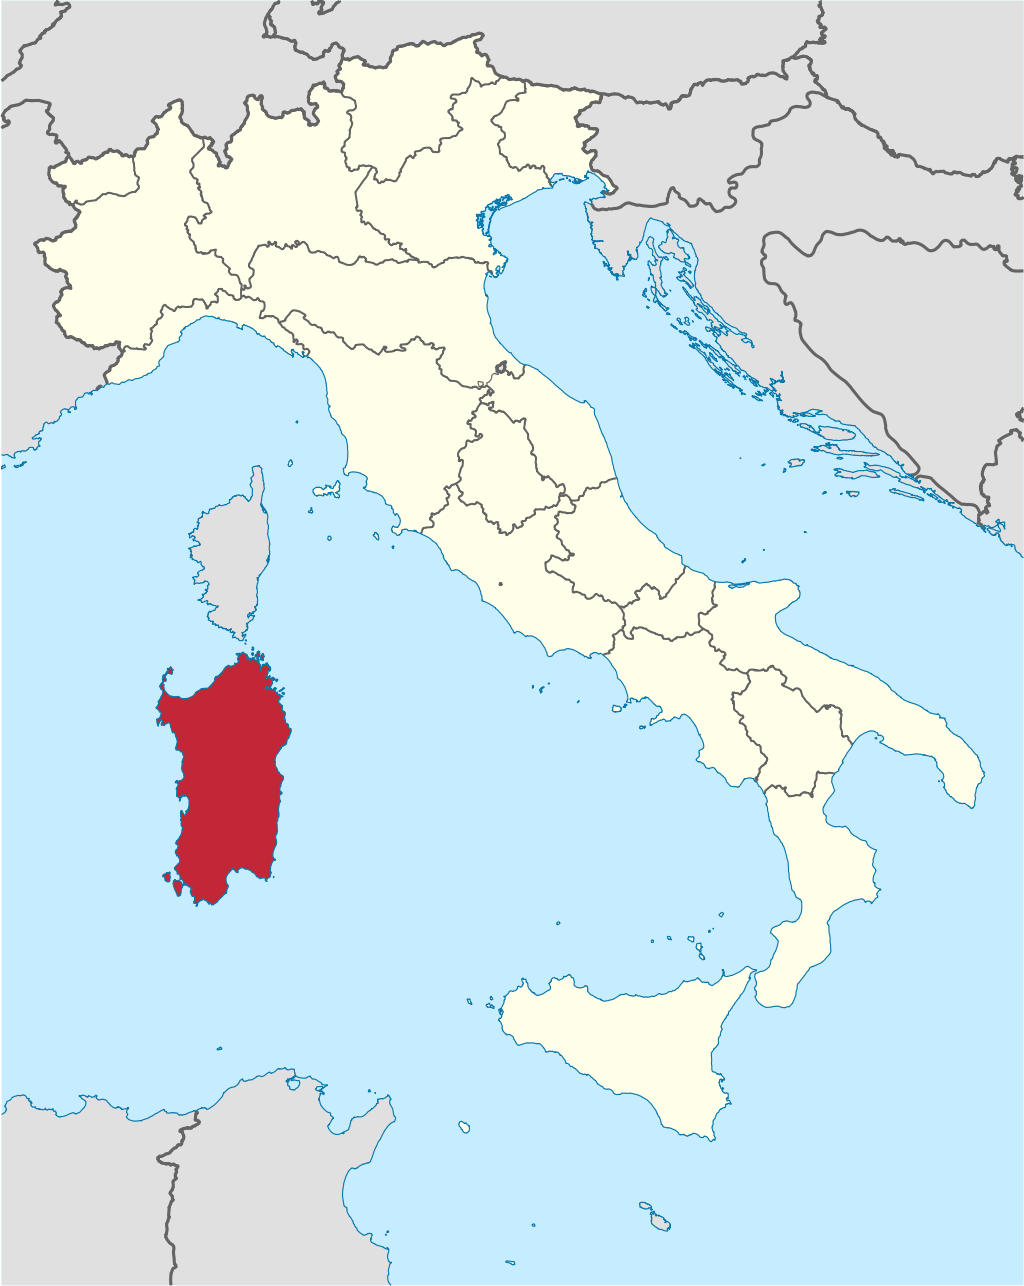 Chapel Au Urbex location or around the region Sardegna (Sassari), Italy